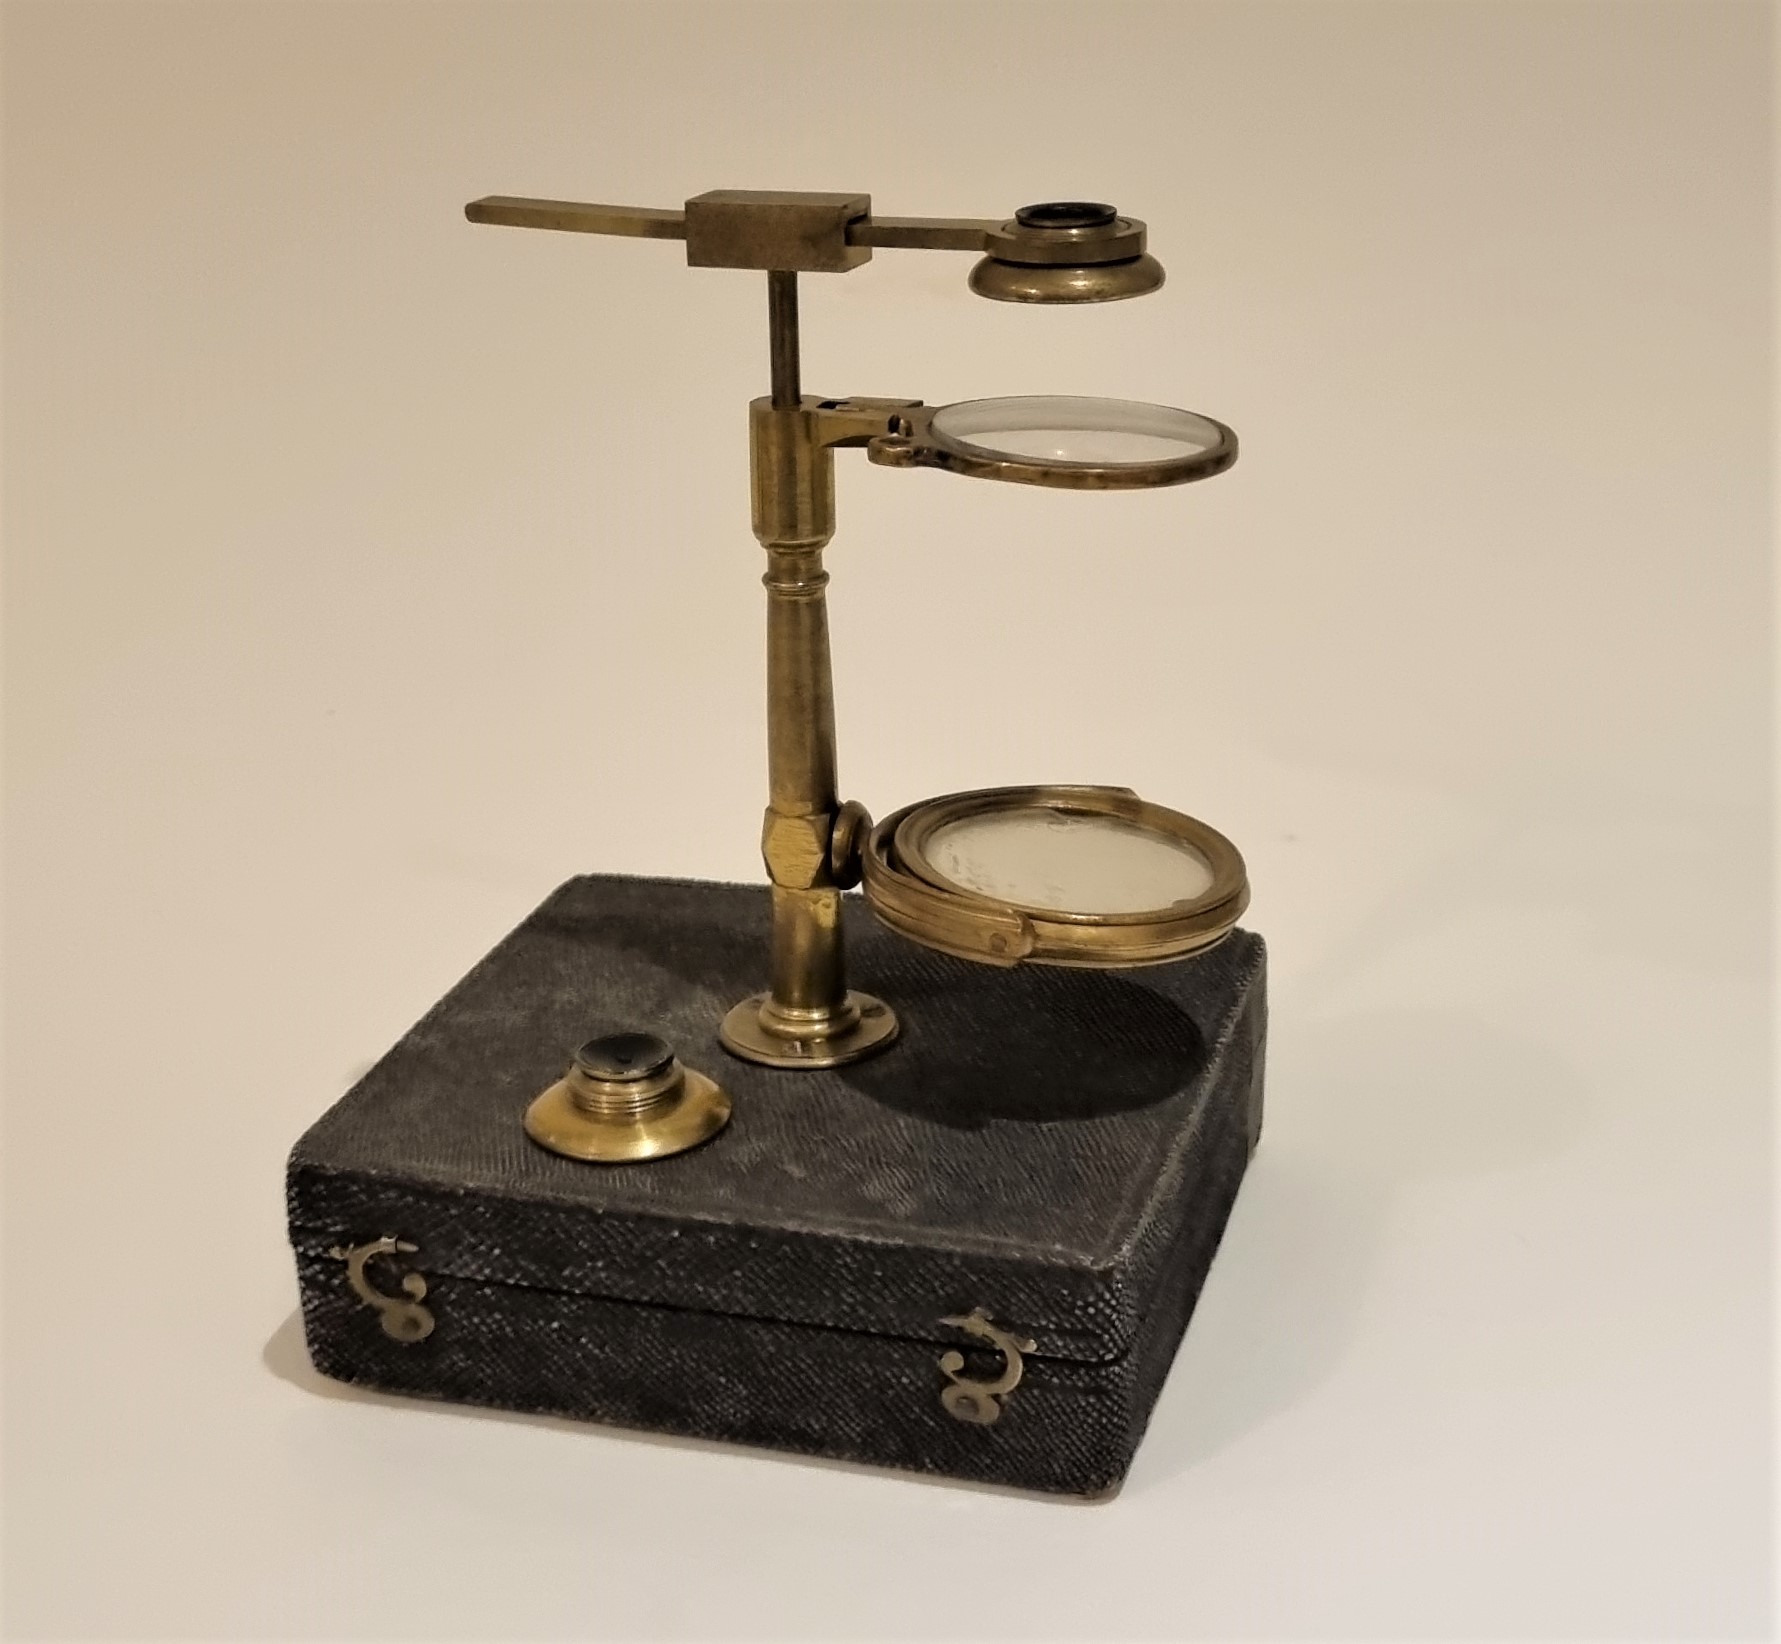 Ellis-type Aquatic simple Microscope, UK, Circa 1760-1770